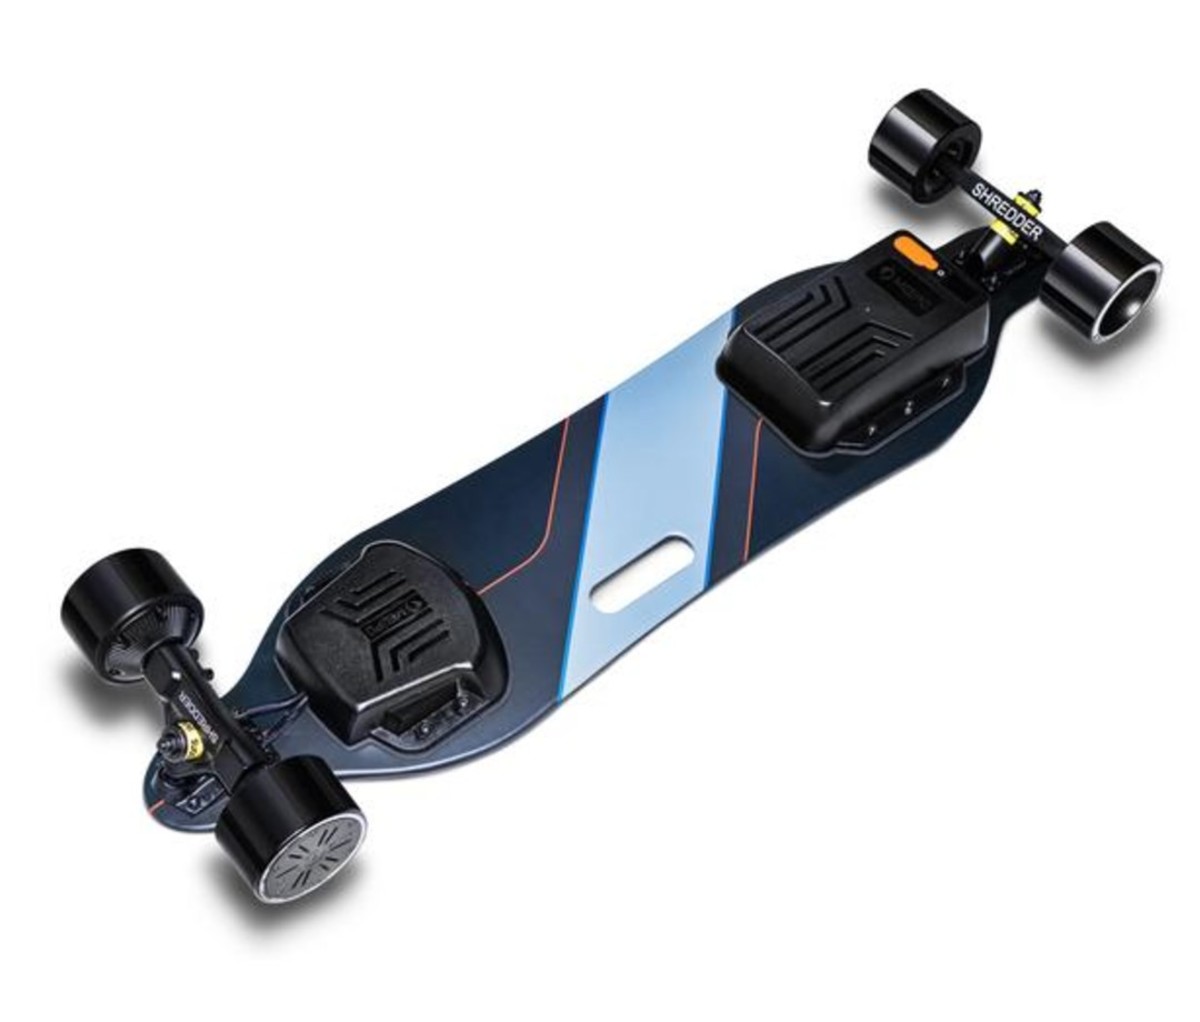 Meepo V3 Electric Skateboard Specs